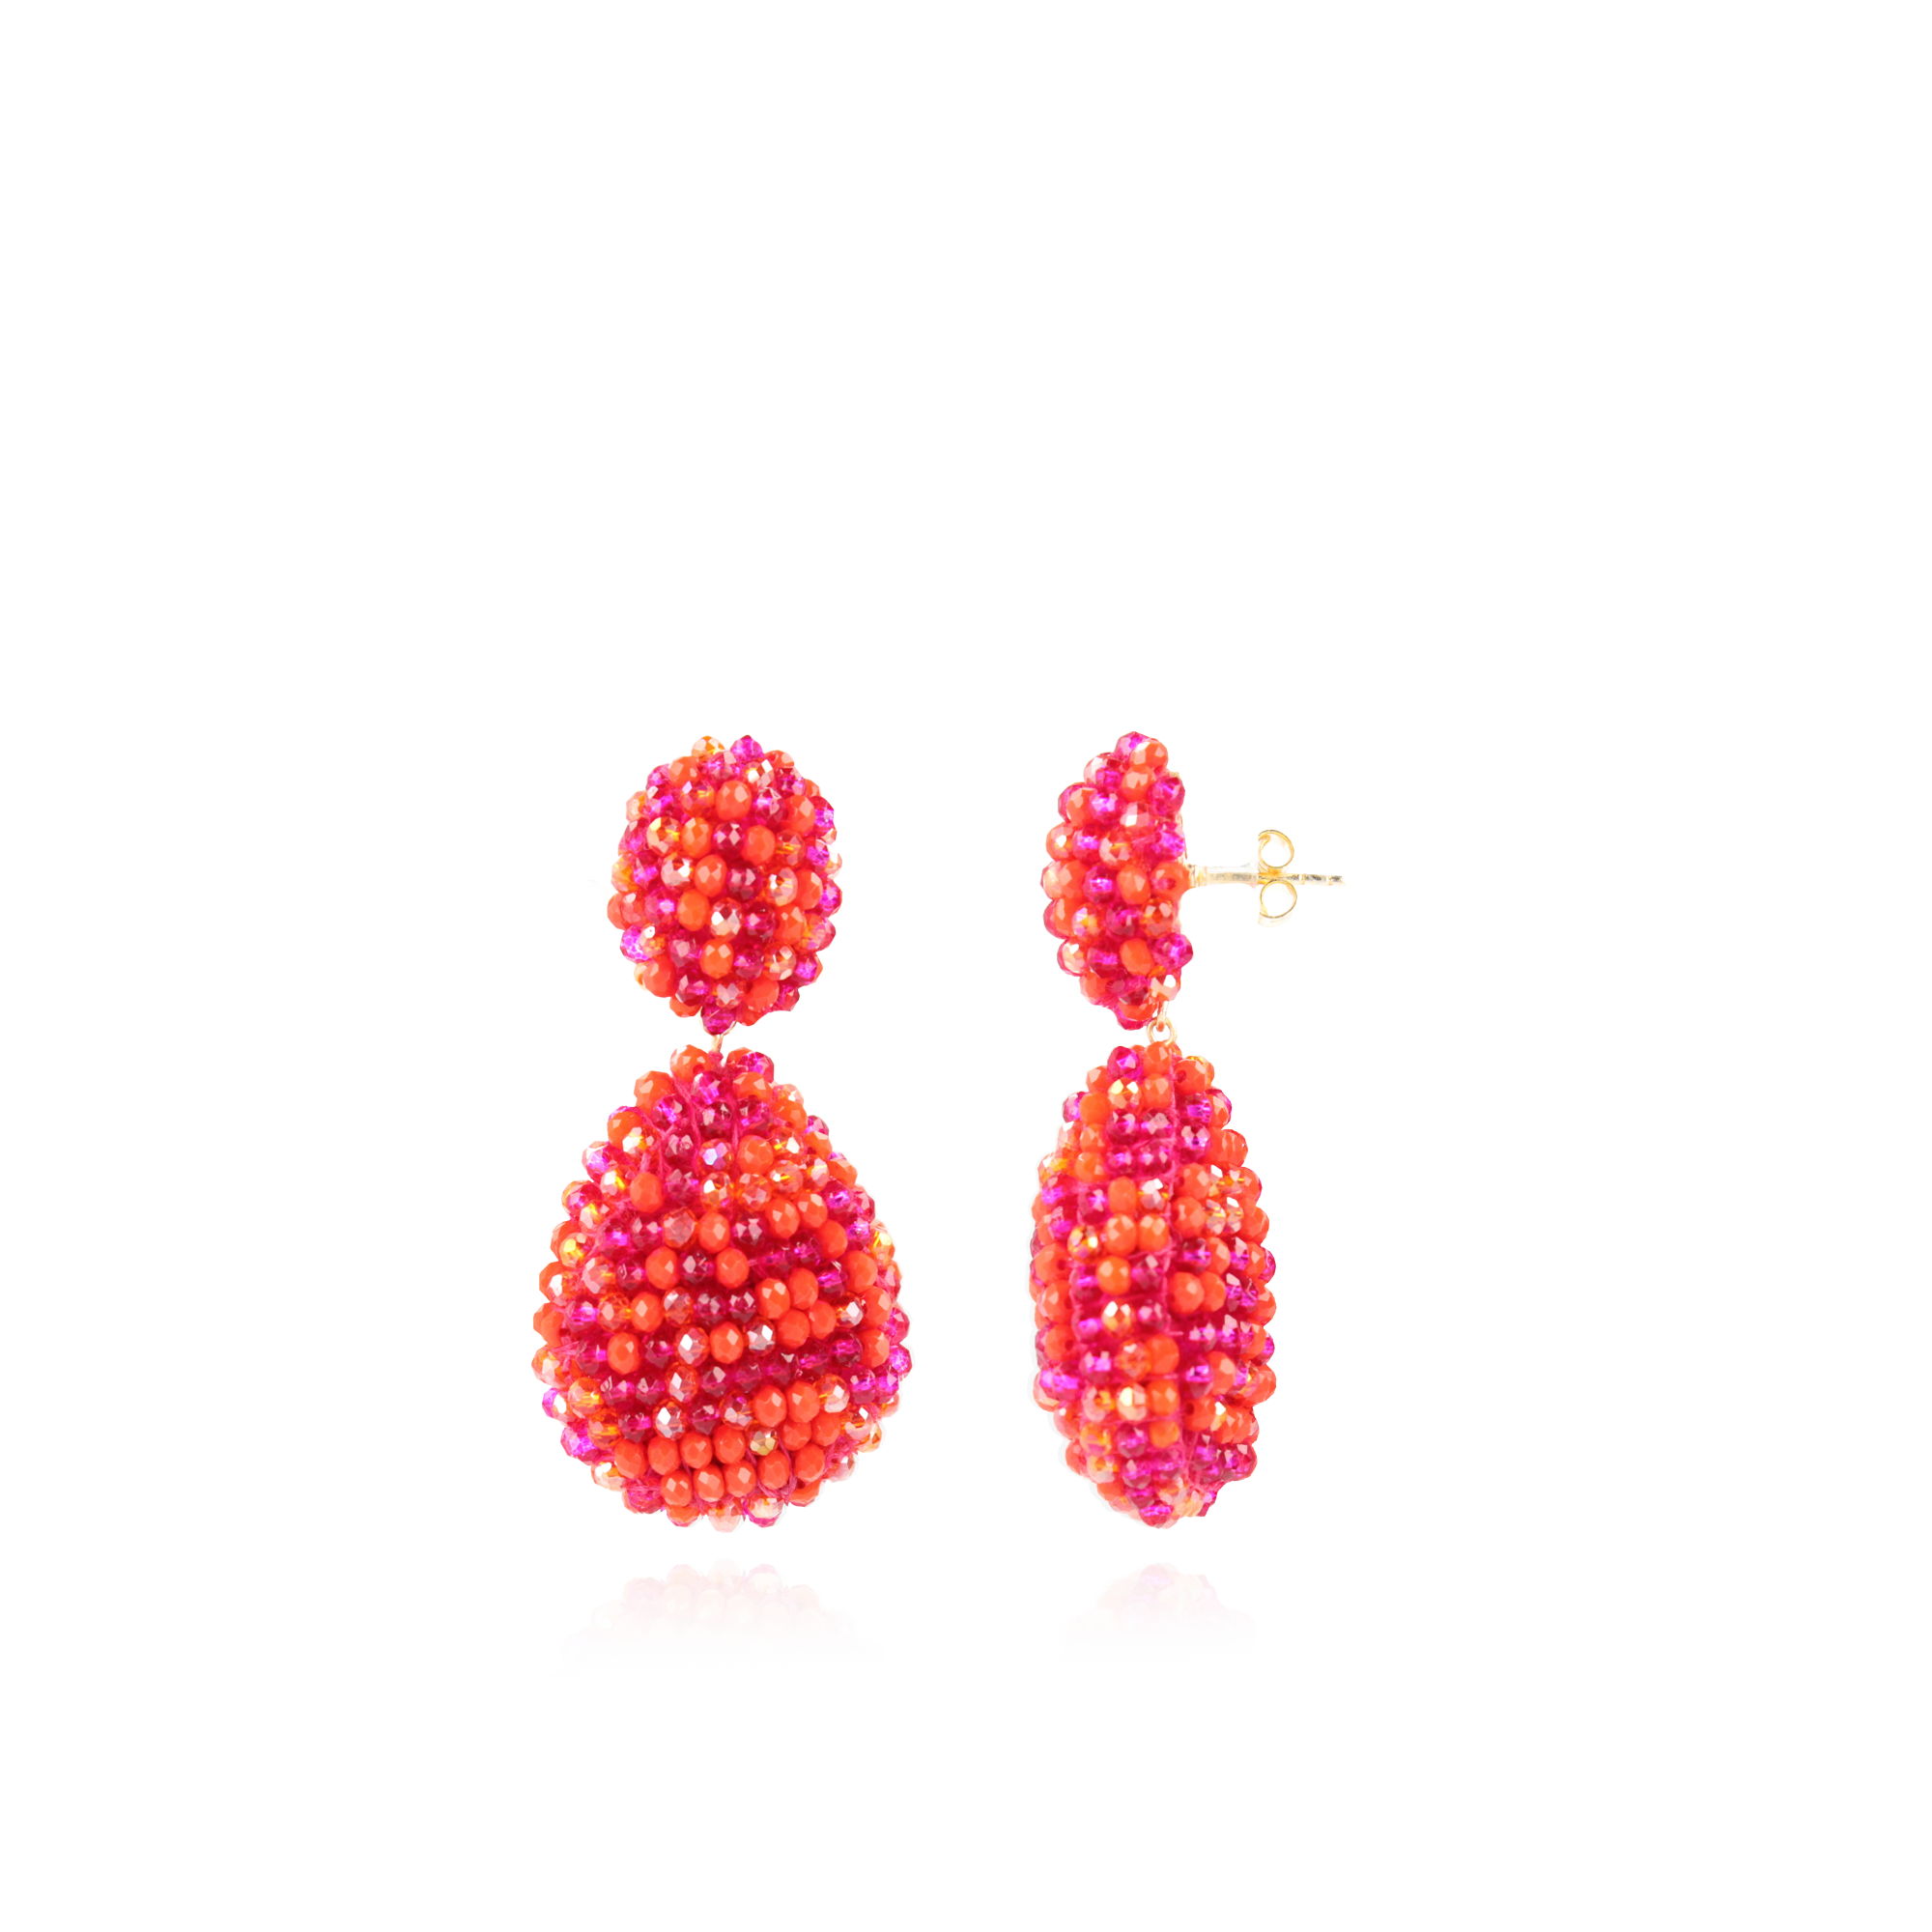 Mixed Fuchsia Oorbellen Kenza Glassberry Druppel Slott-theme.productDescriptionPage.SEO.byTheBrand